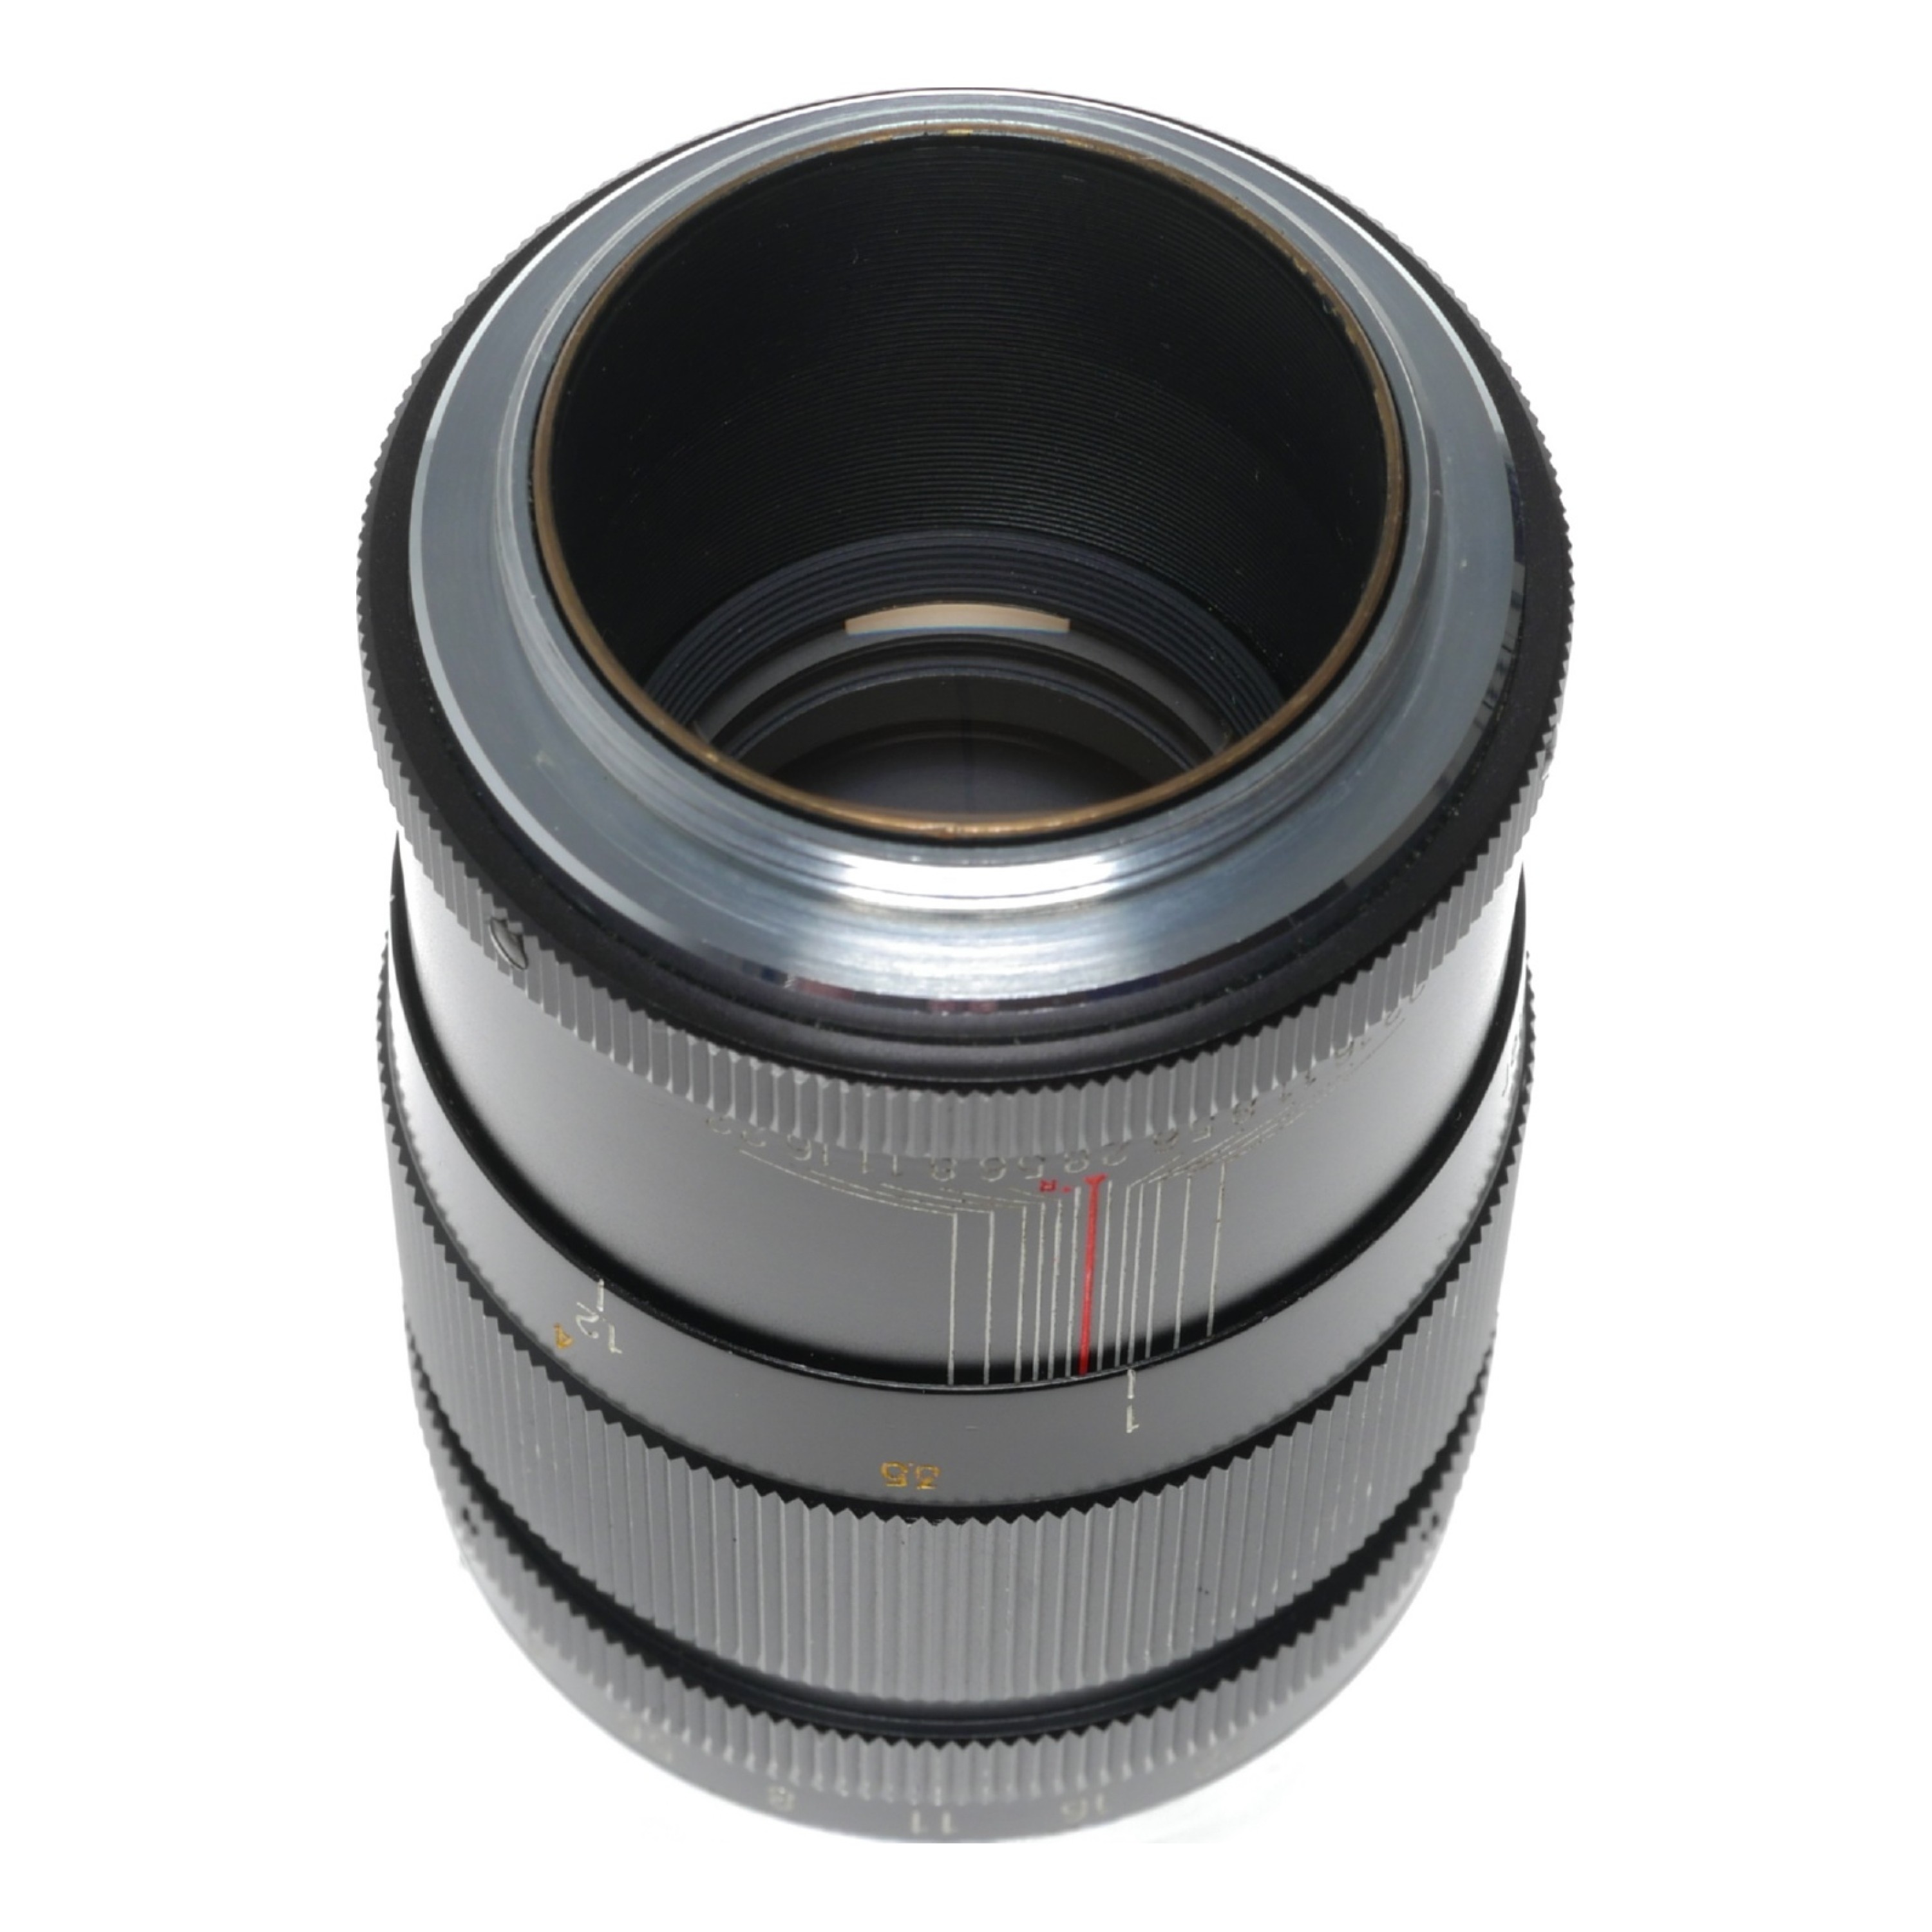 Yashica Super-Yashinon 1:2.8 f=10cm Leica M39 screw mount 2.8/100mm